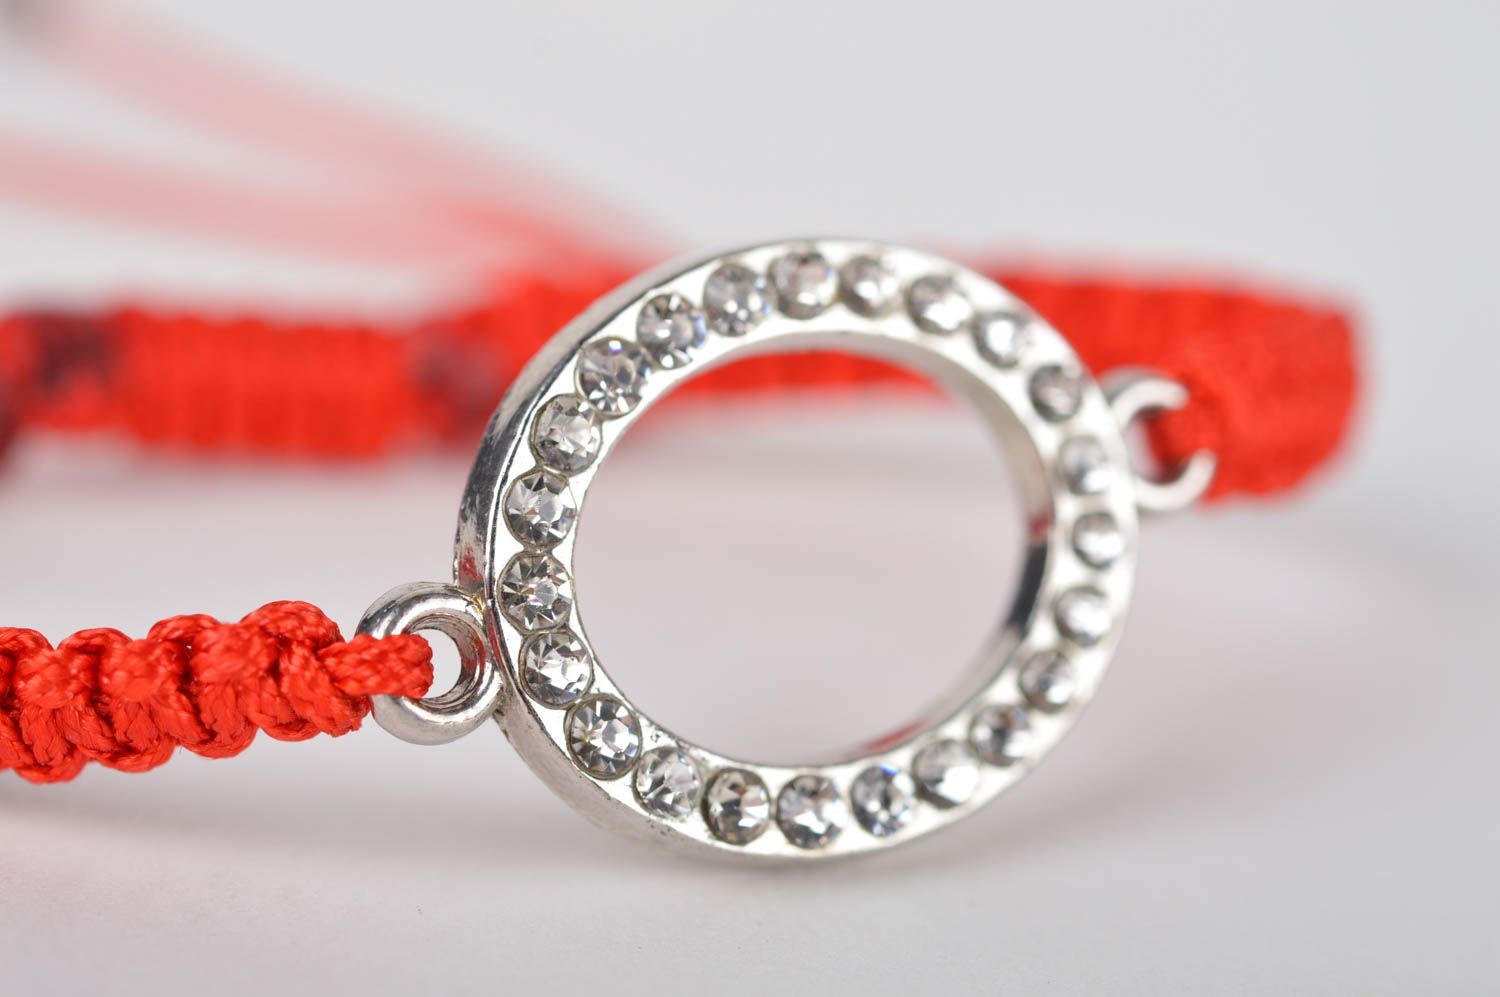 Unusual handmade thread bracelet friendship bracelet designs gifts for her photo 3